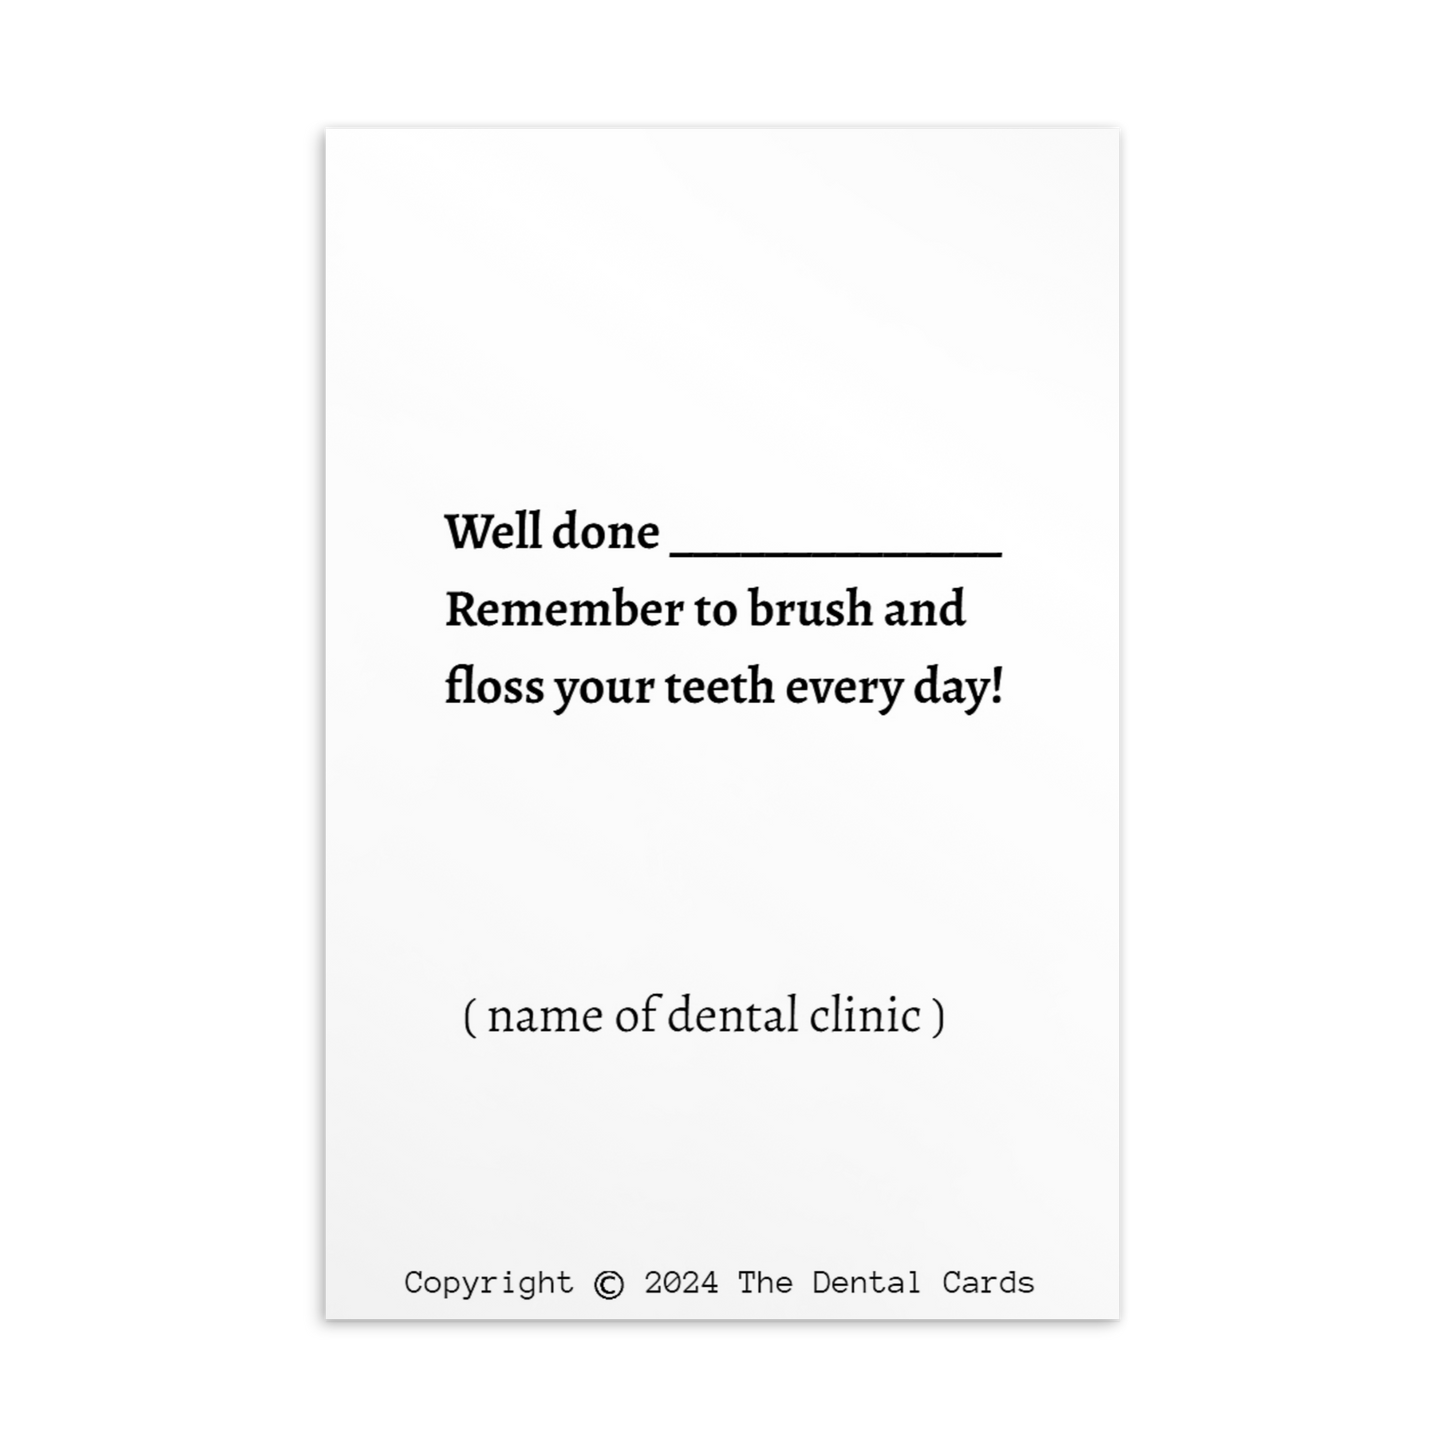 Dental Motivational & Reward Cards- Congratulations You're A Super Brusher!